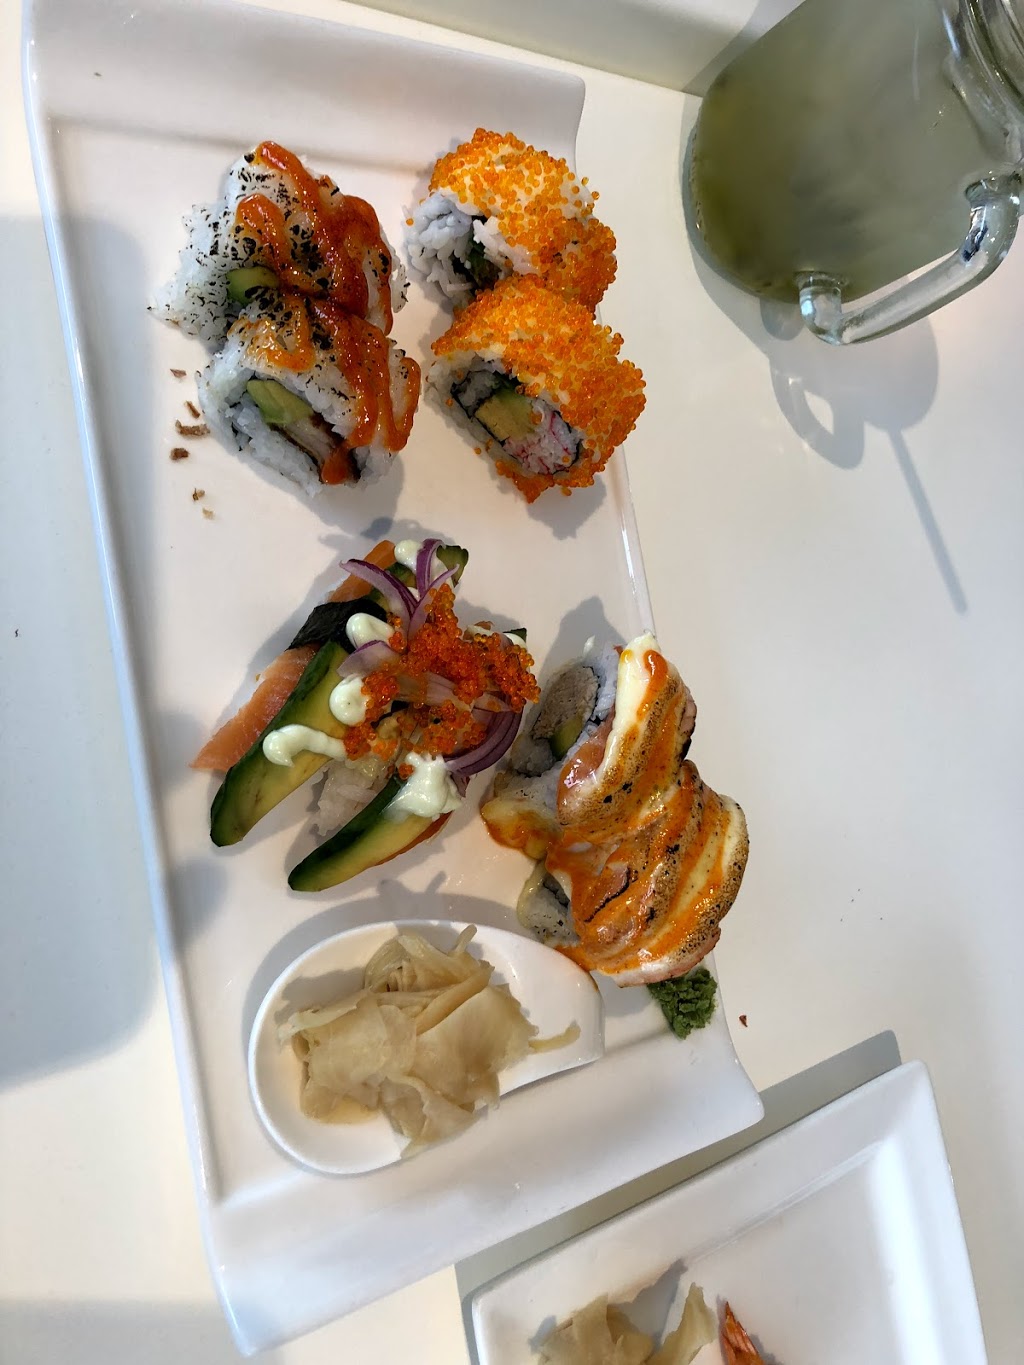 Mokoji Sushi | restaurant | 4/7 Lindsay St, Hawthorne QLD 4171, Australia | 0738993409 OR +61 7 3899 3409